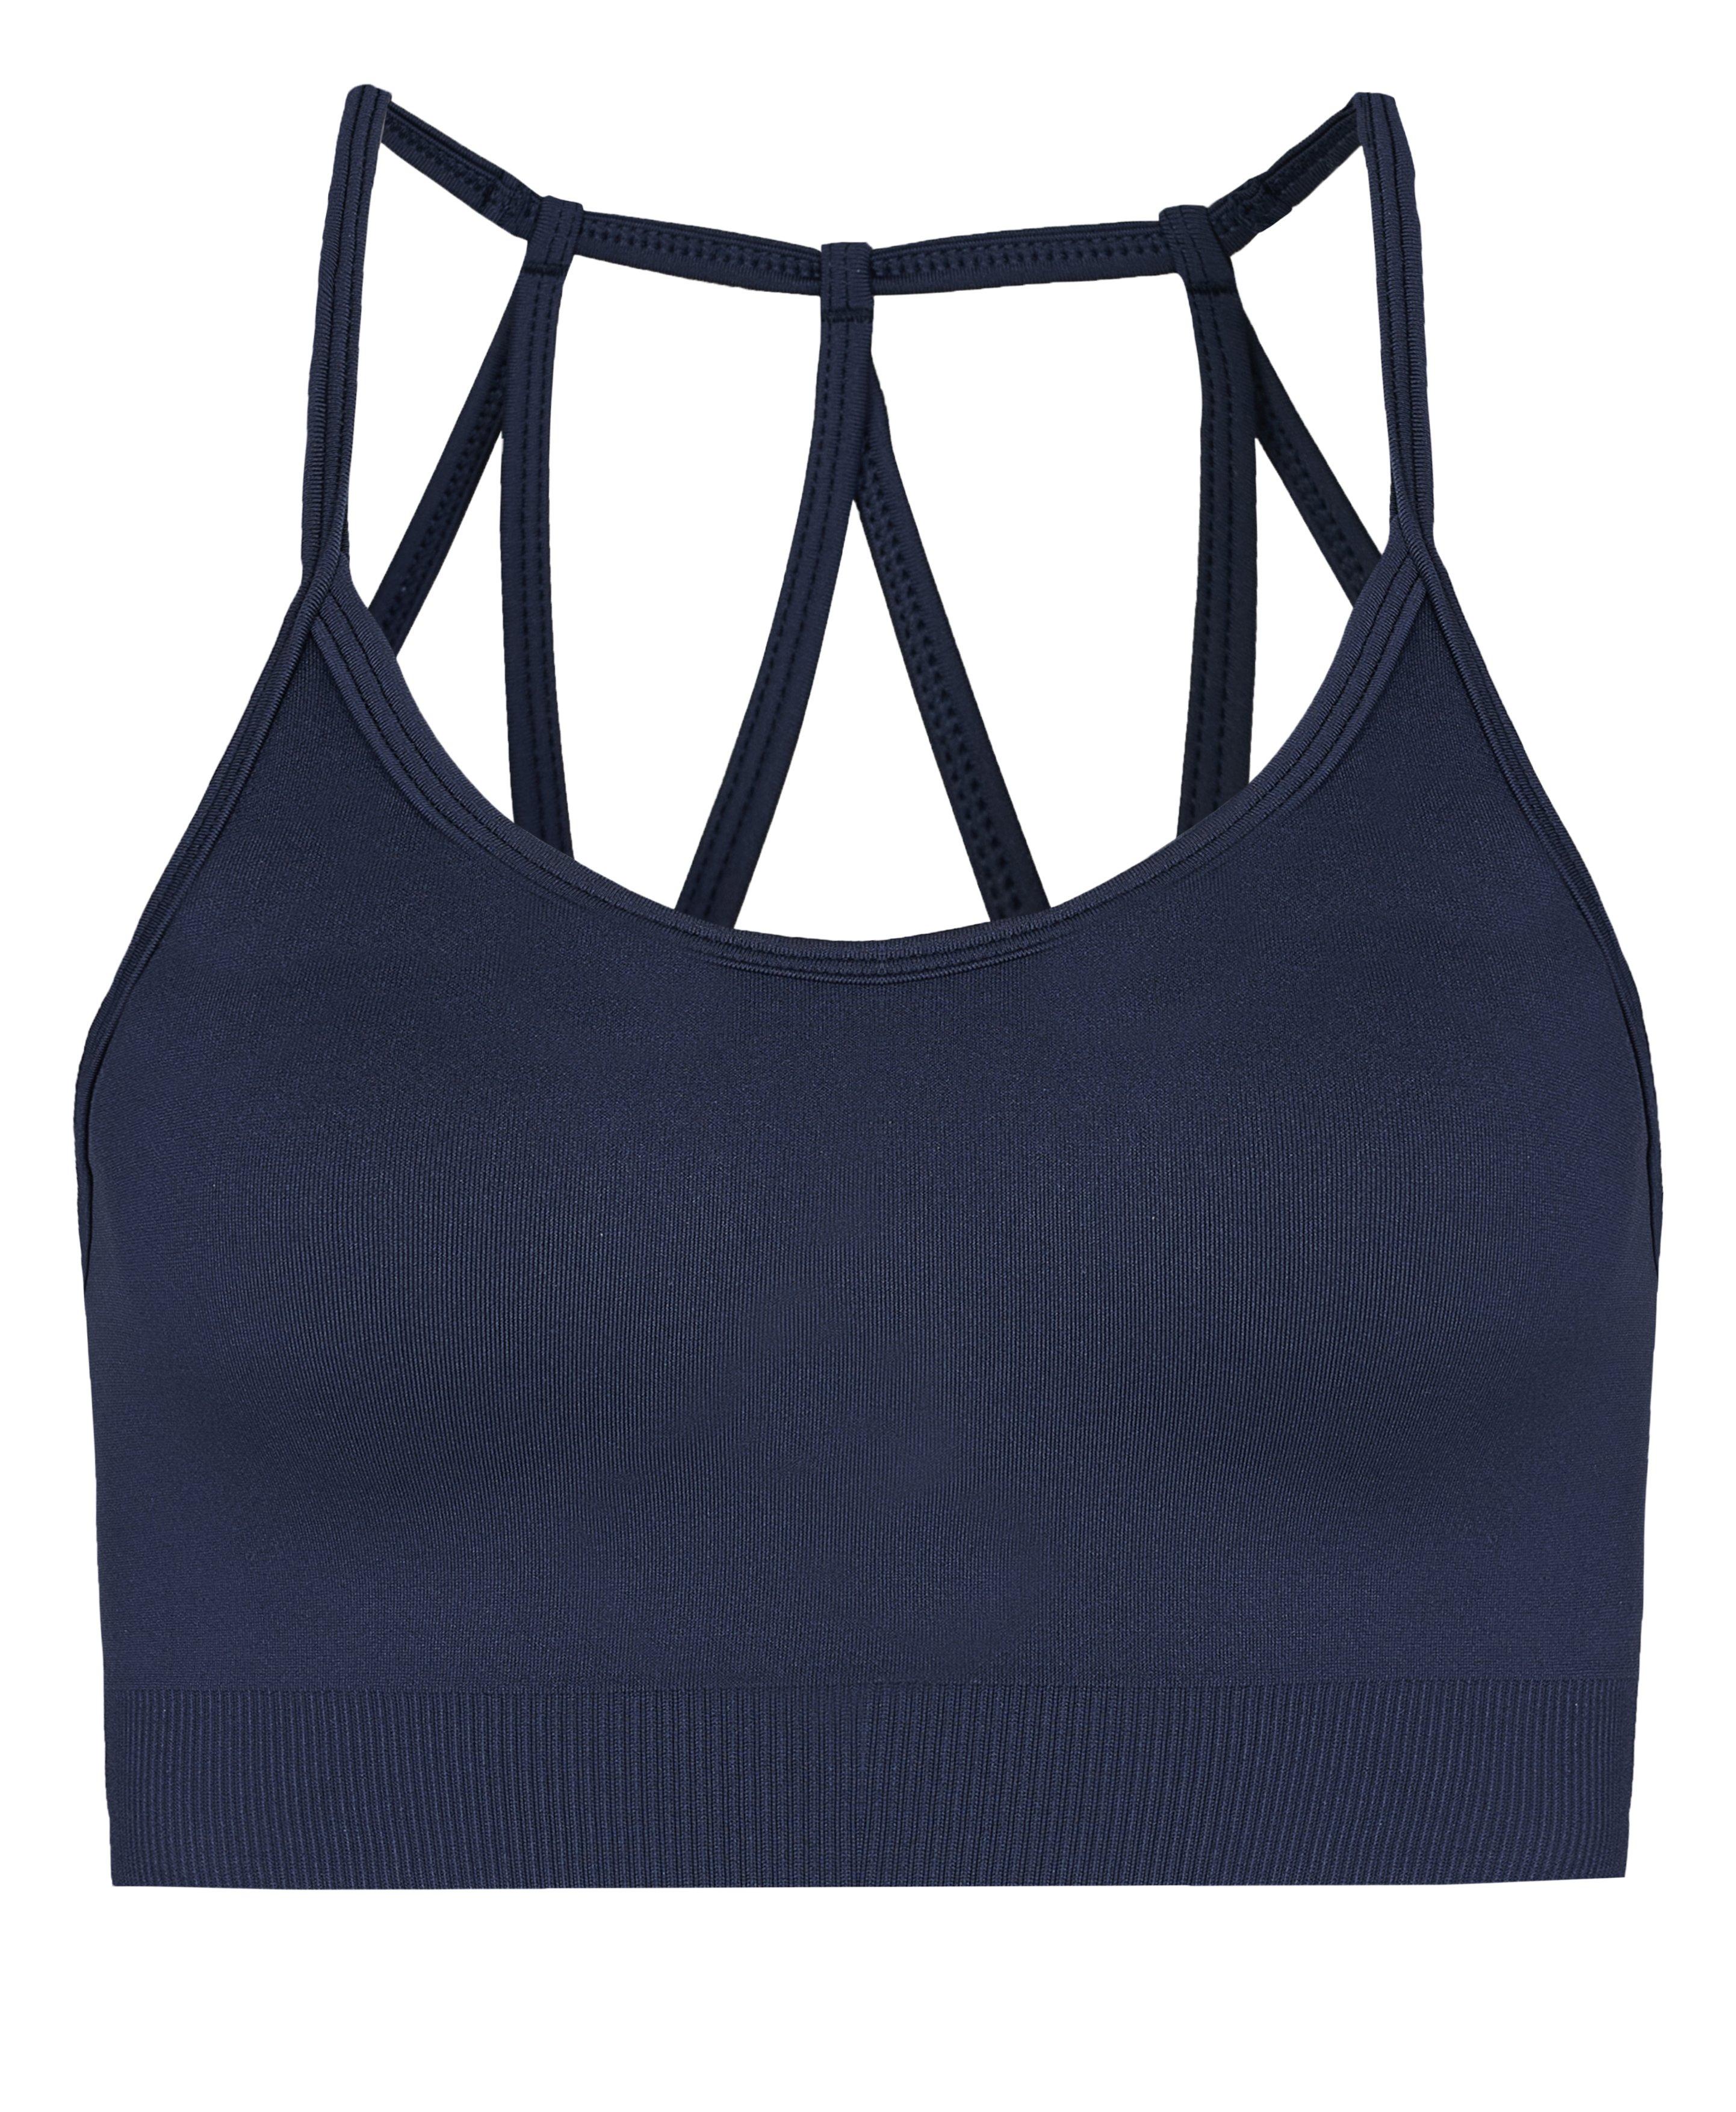 Bali Blue Stella Navy Printed Seamless Racerback Sport Yoga Bra - Women -  Pineapple Clothing